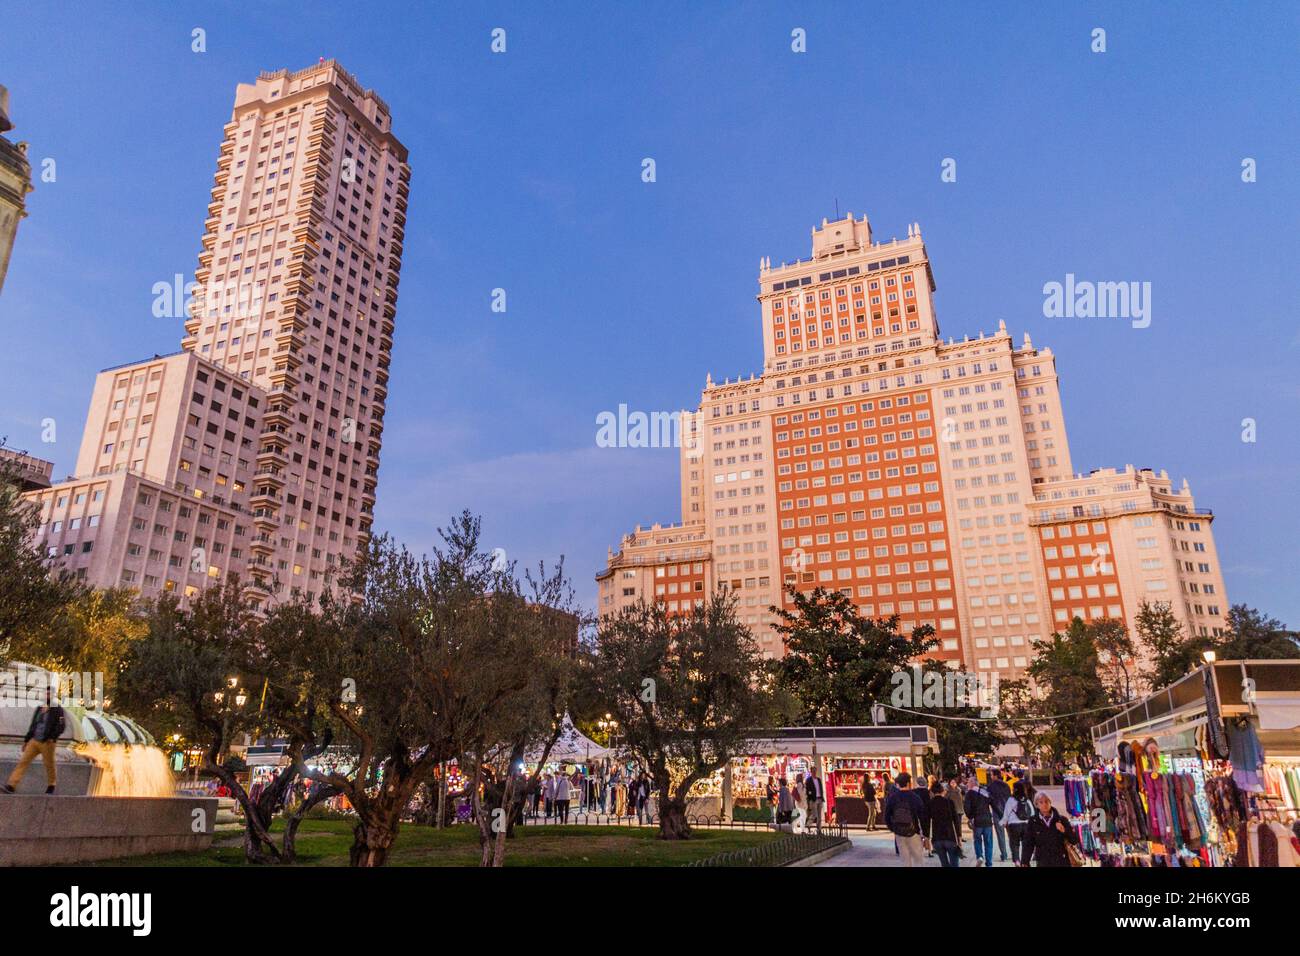 MADRID, SPAIN - OCTOBER 24, 2017: Torre de Madrid and Edificio Espana buildings in Madrid. Stock Photo